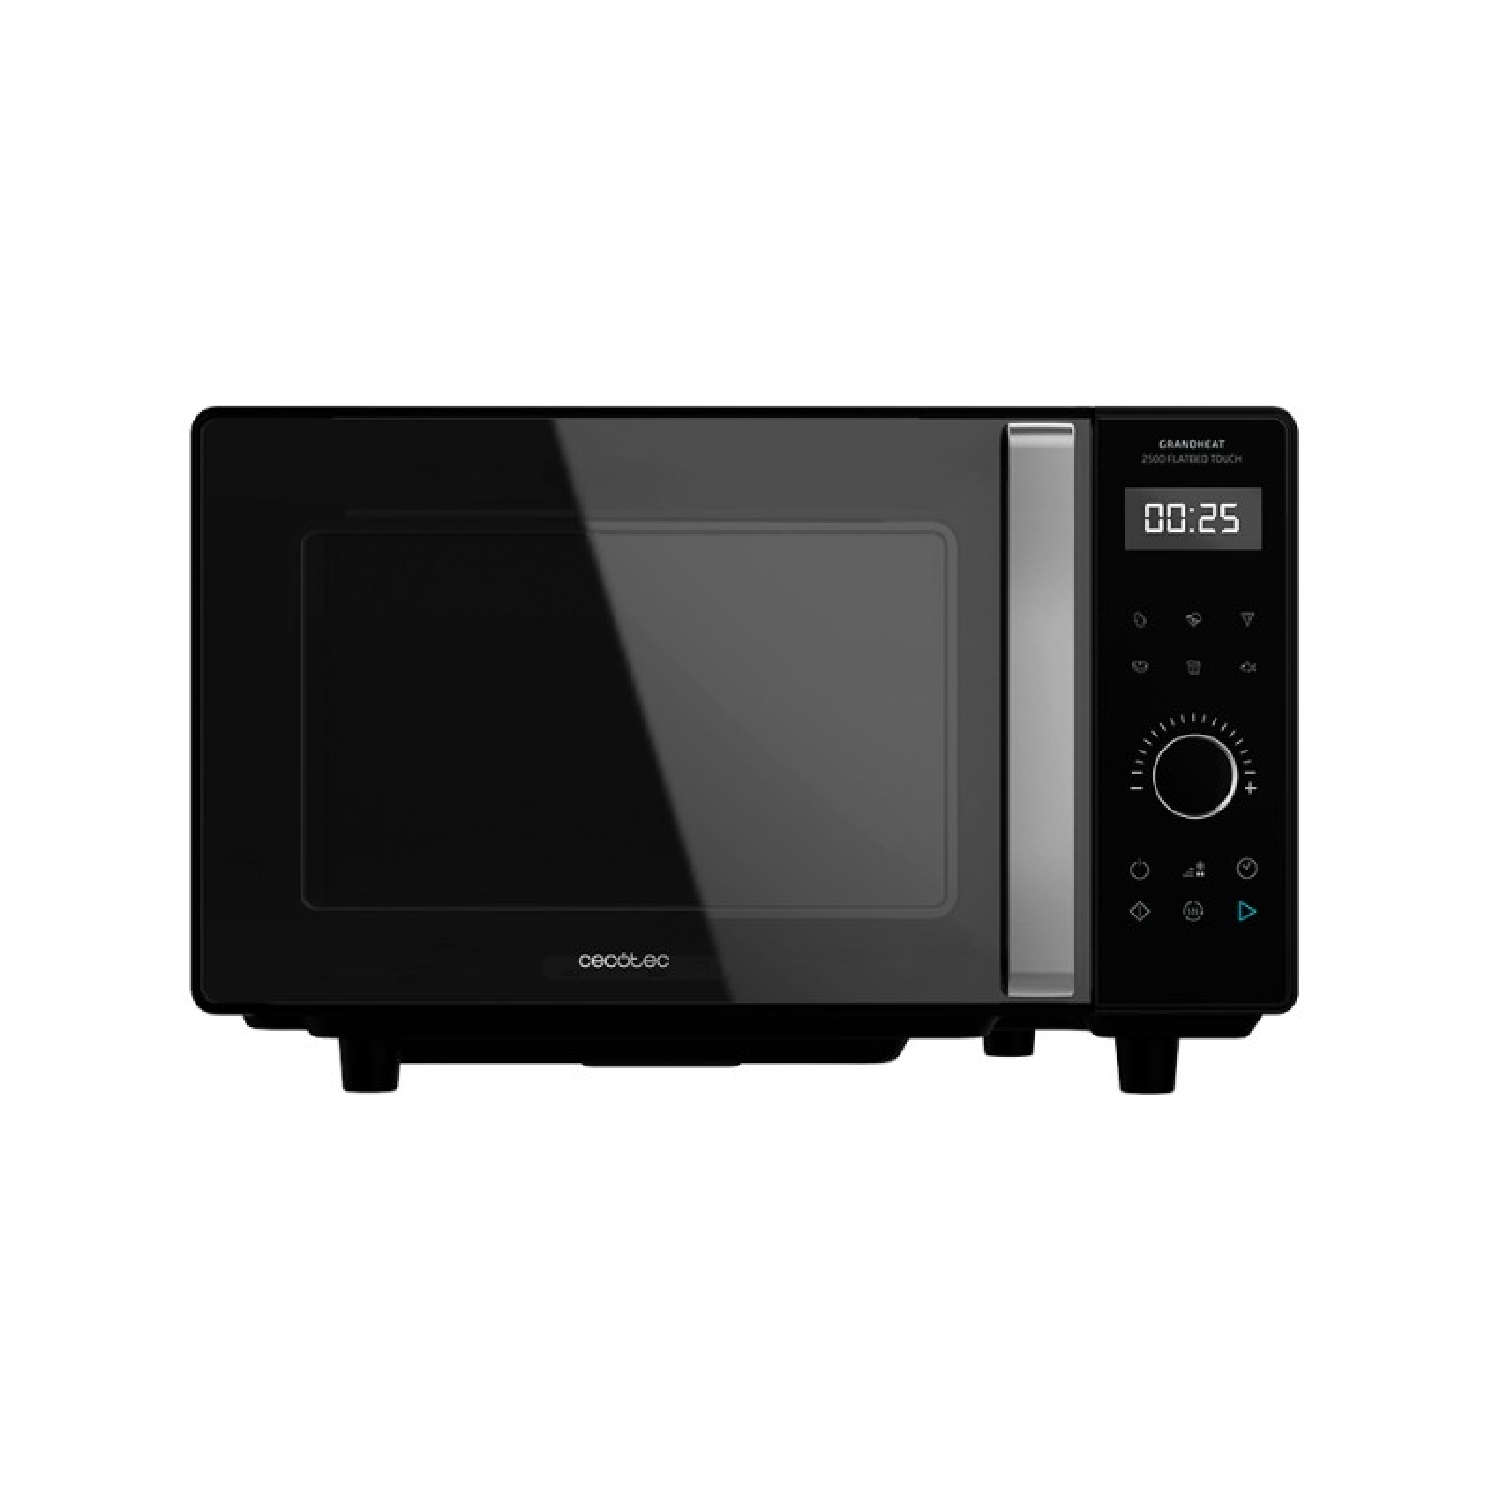 CECOTEC Digital GrandHeat 2500 Flatbed Watt) Microwave (1280